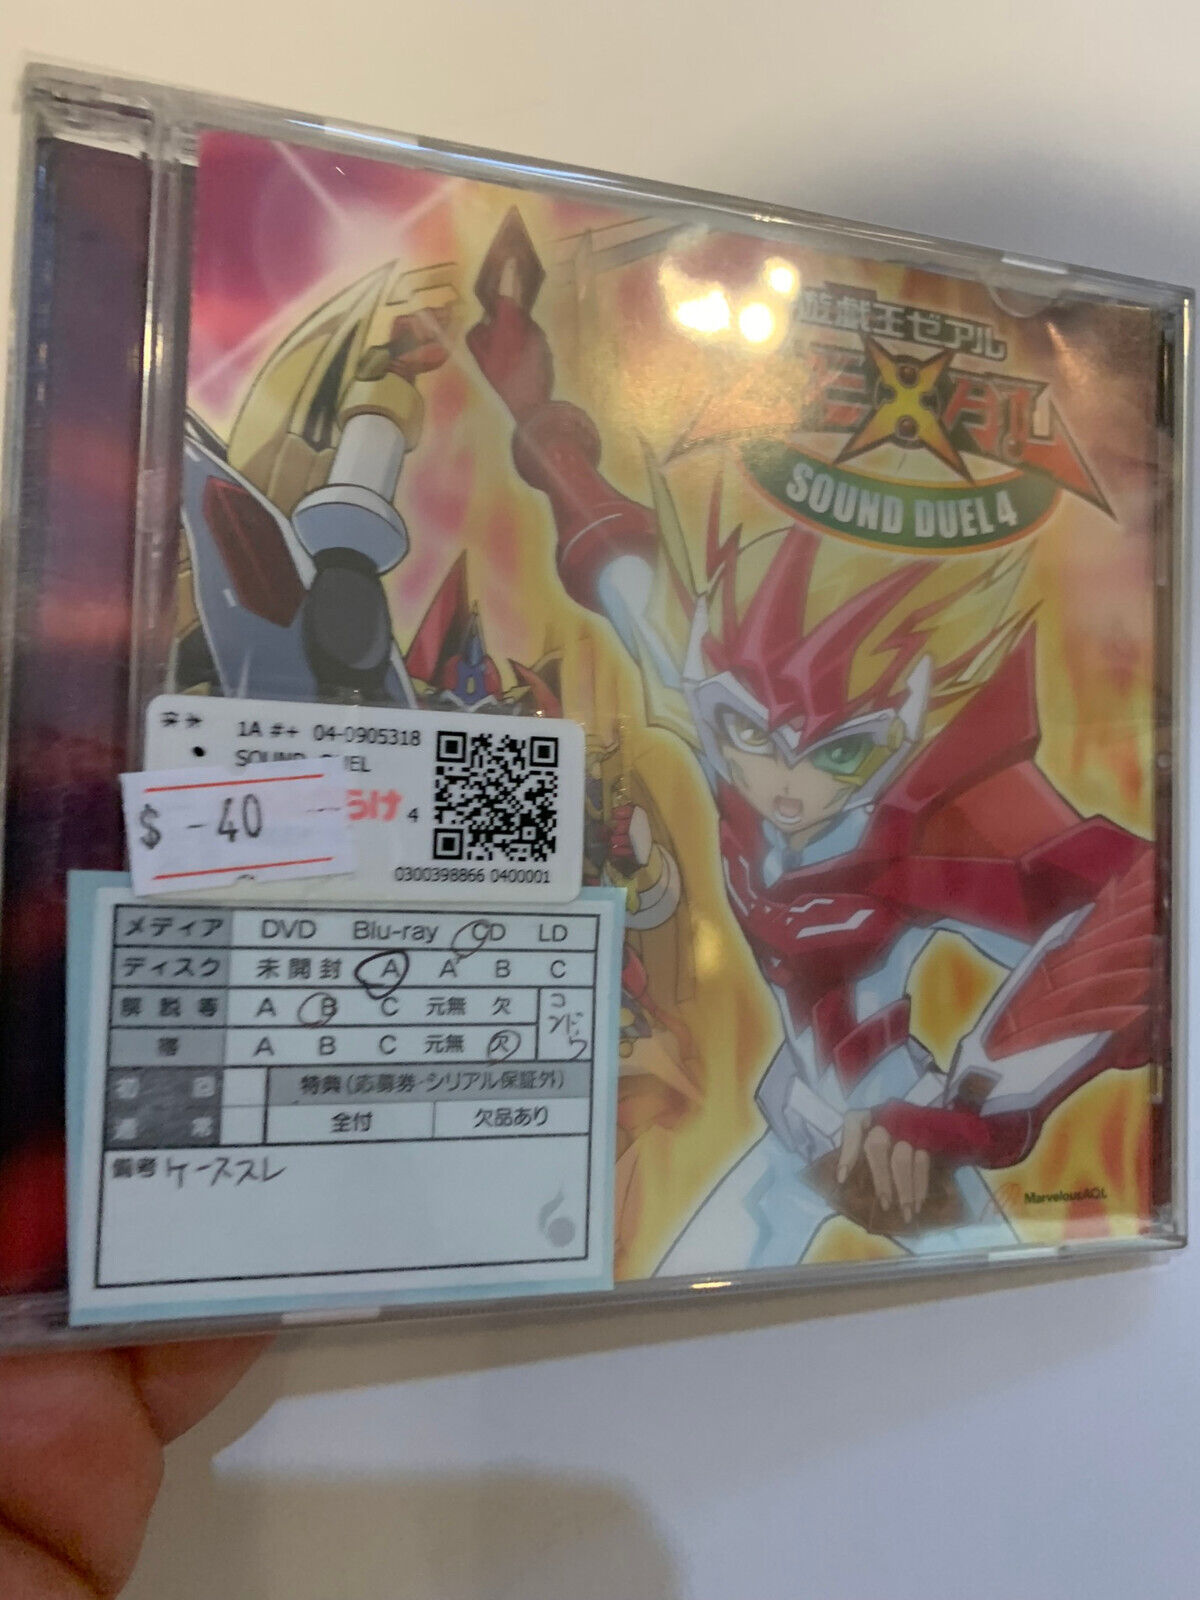 Yu-Gi-Oh ZEXAL SOUND DUEL 4 cd soundtrack ost bgm